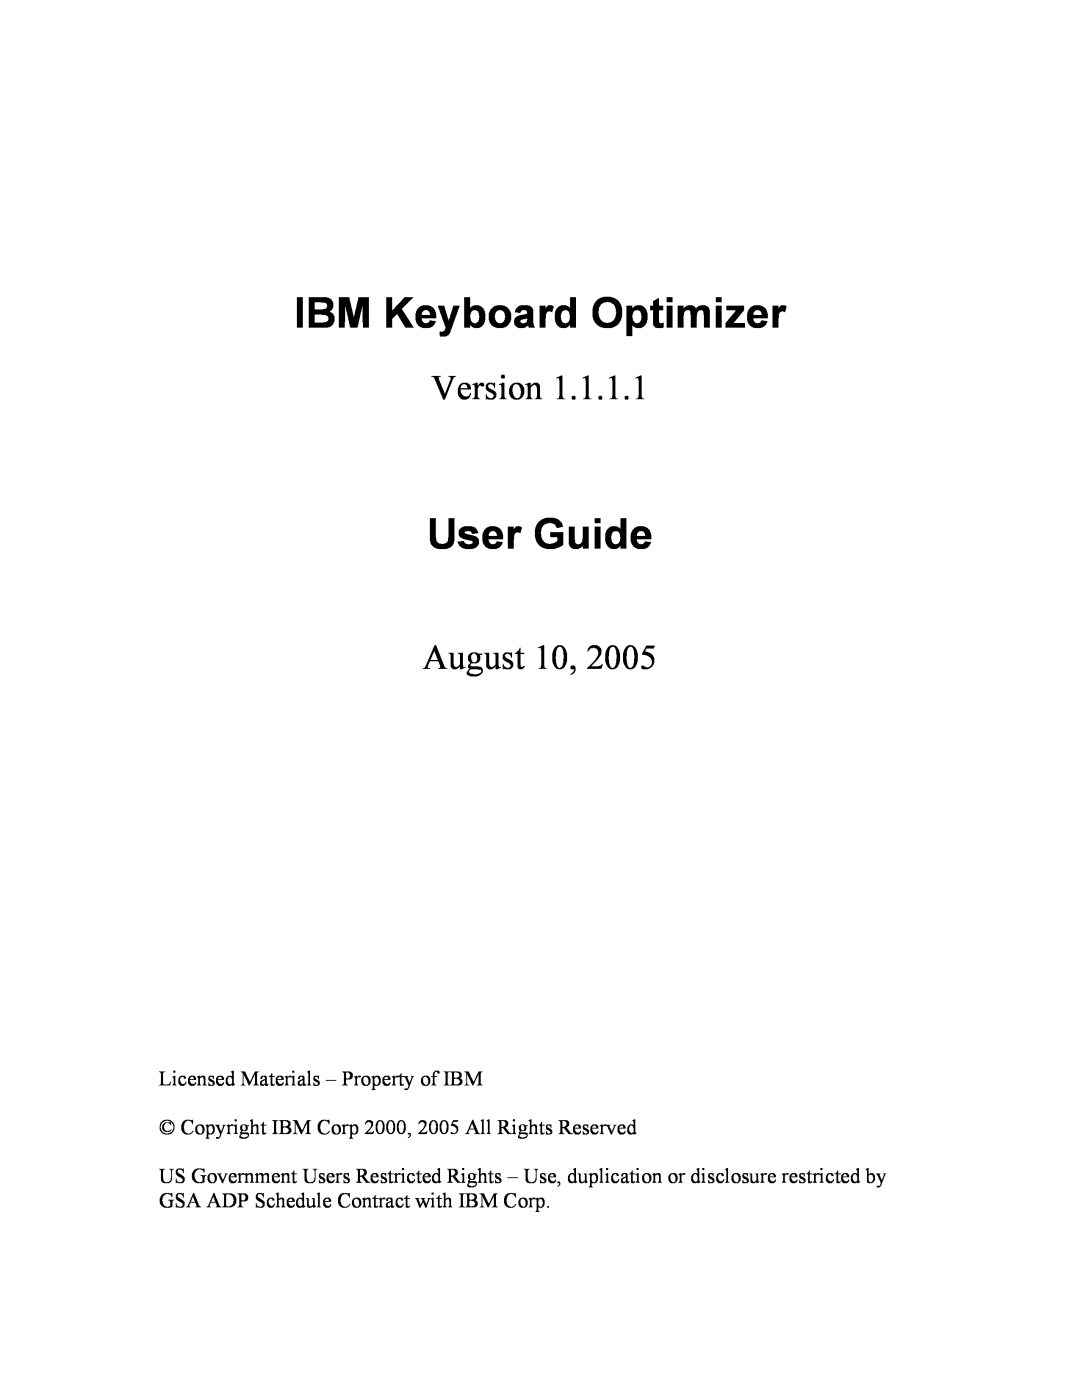 IBM manual IBM Keyboard Optimizer, User Guide, Version, August 